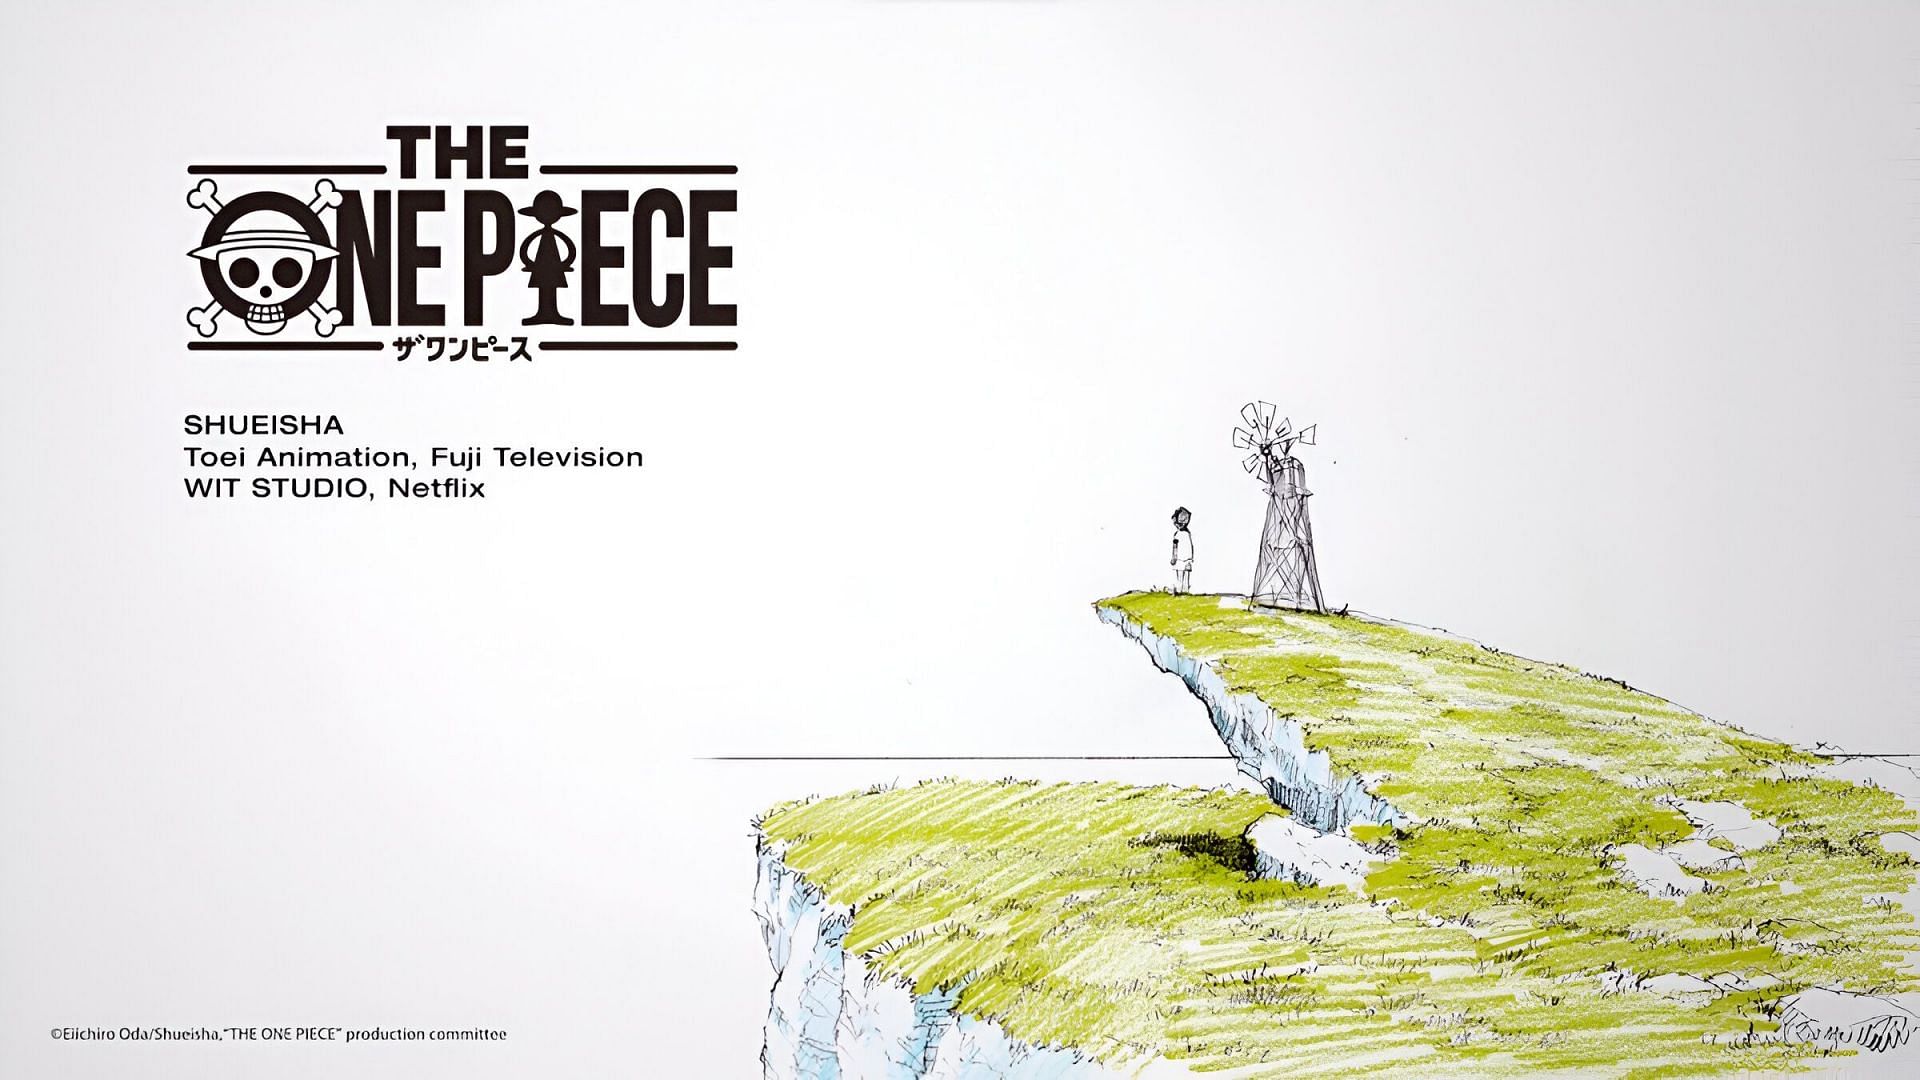 One Piece remake announcement poster (Image via Wit studio)